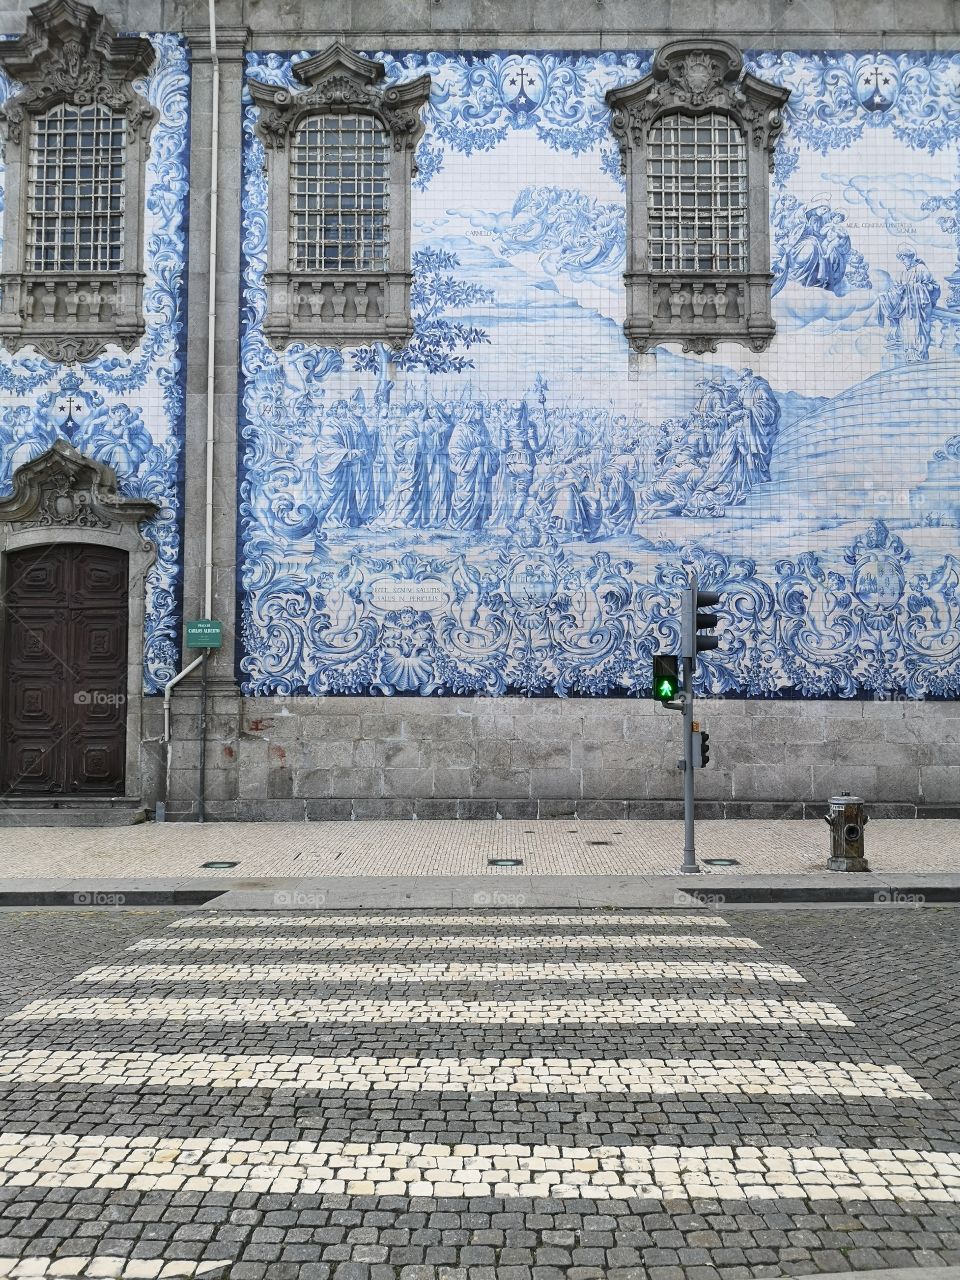 Lisbon ceramic tiles on church